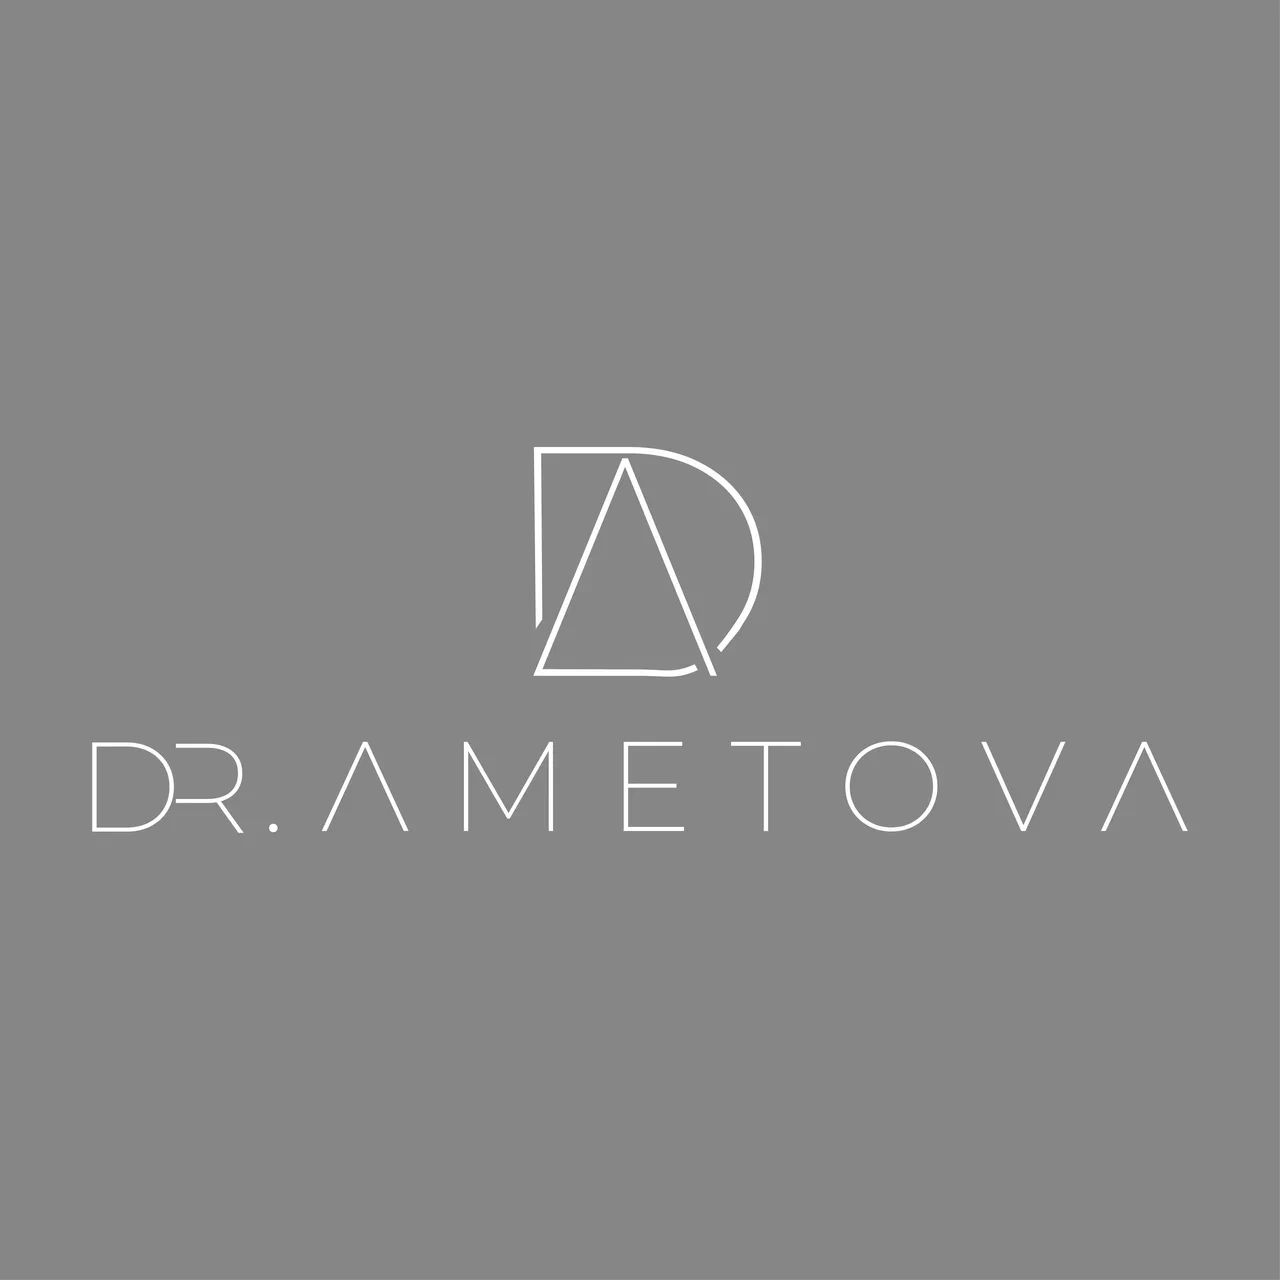 Dr. Ametova